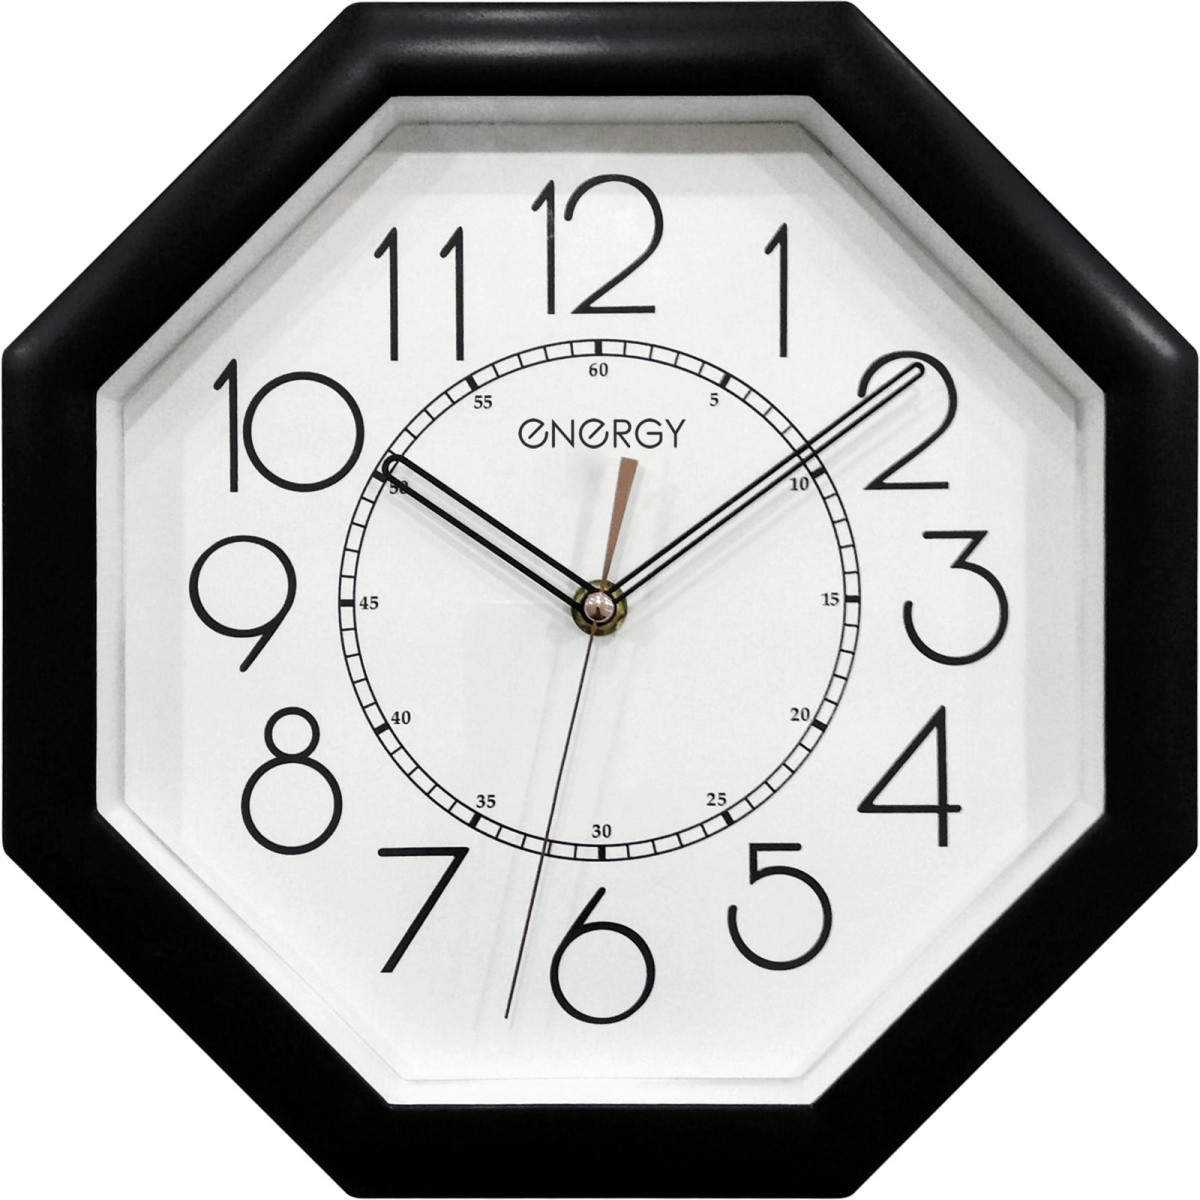 ЕС-125 восьмиугольные (009499) Часы настенные ENERGY